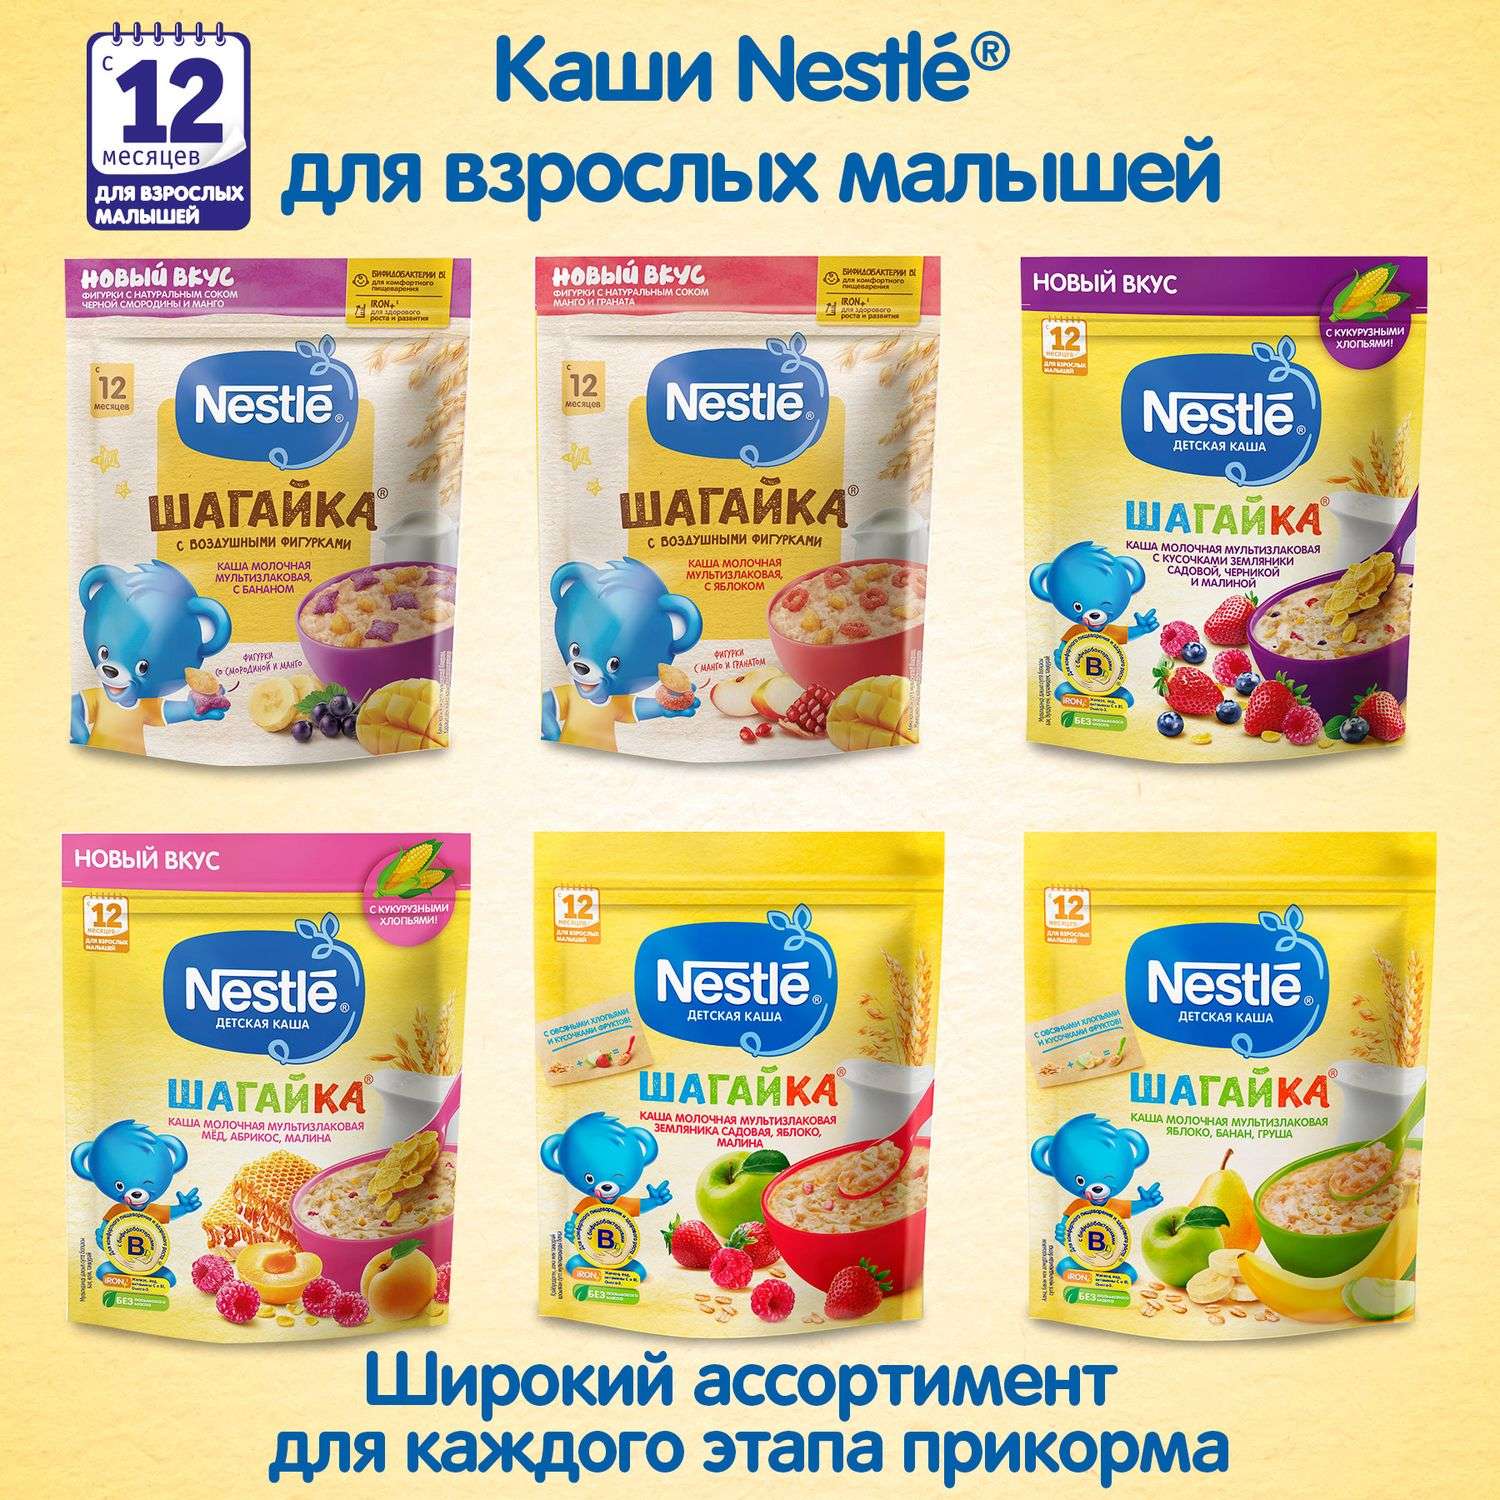 Каша молочная Nestle Шагайка 5 злаков земляника-яблоко-малина 200г с 12месяцев - фото 12